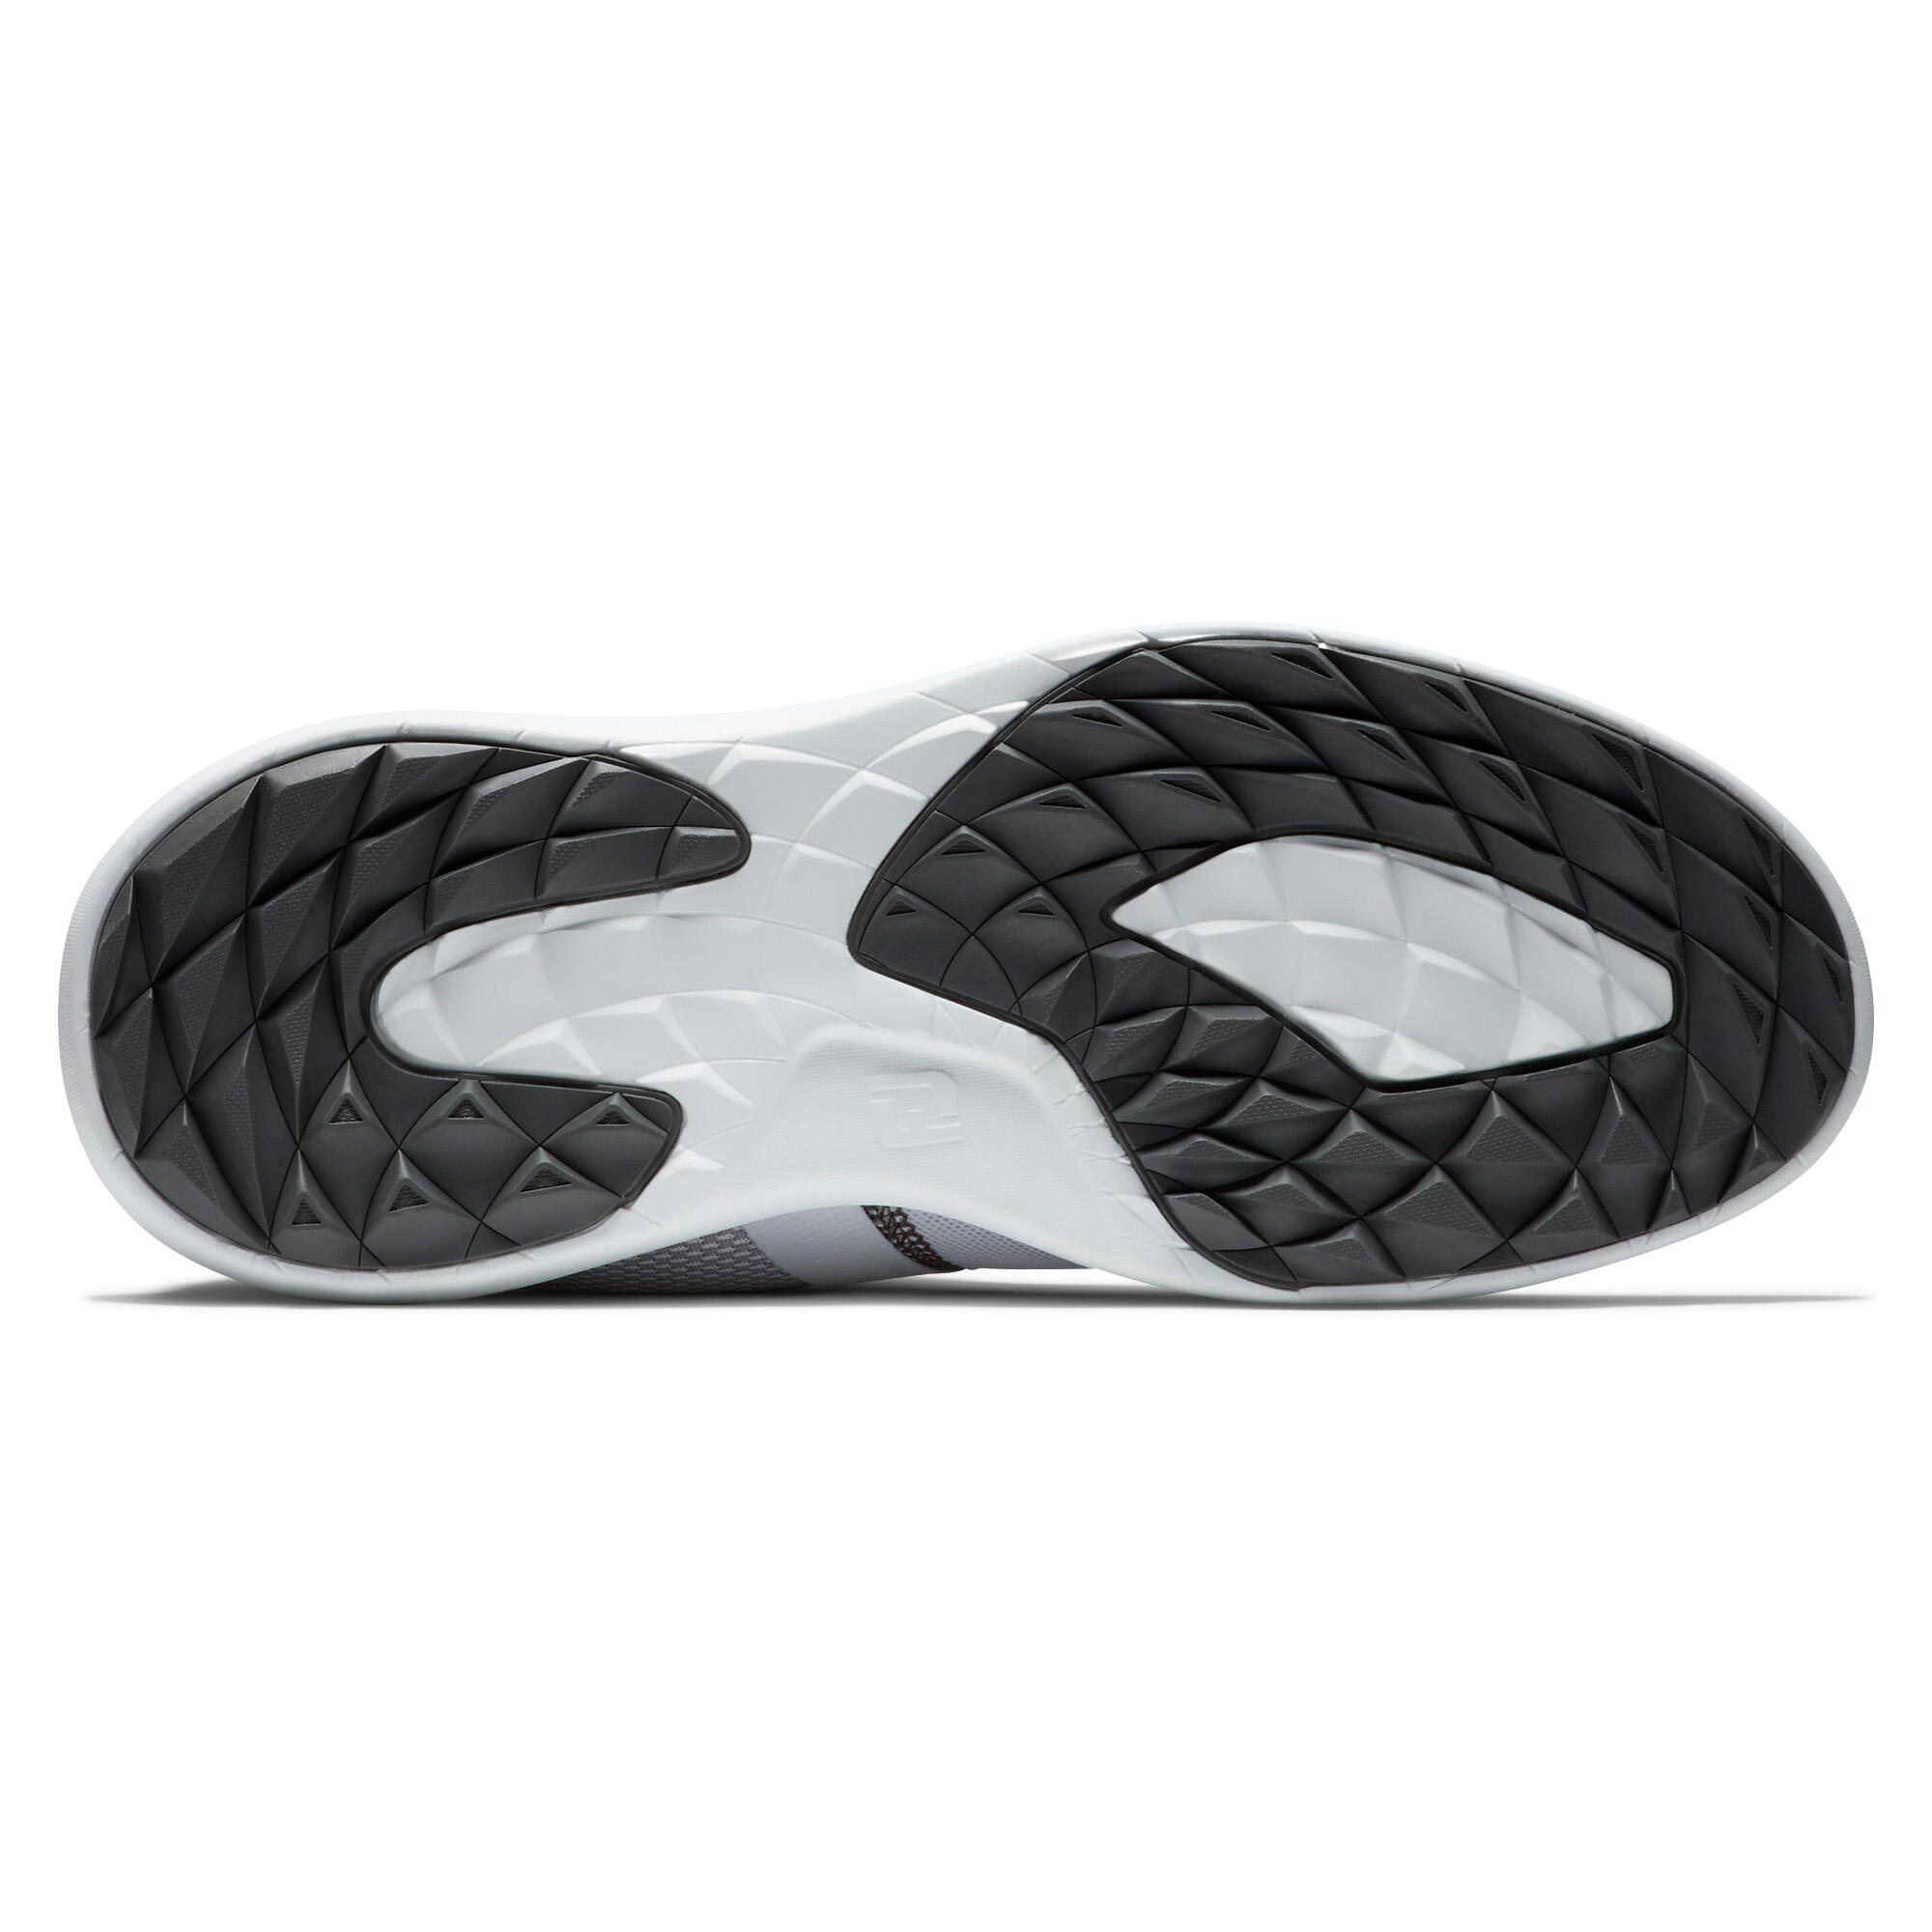 Men’s golf shoes FJ Flex - white and grey 4/6